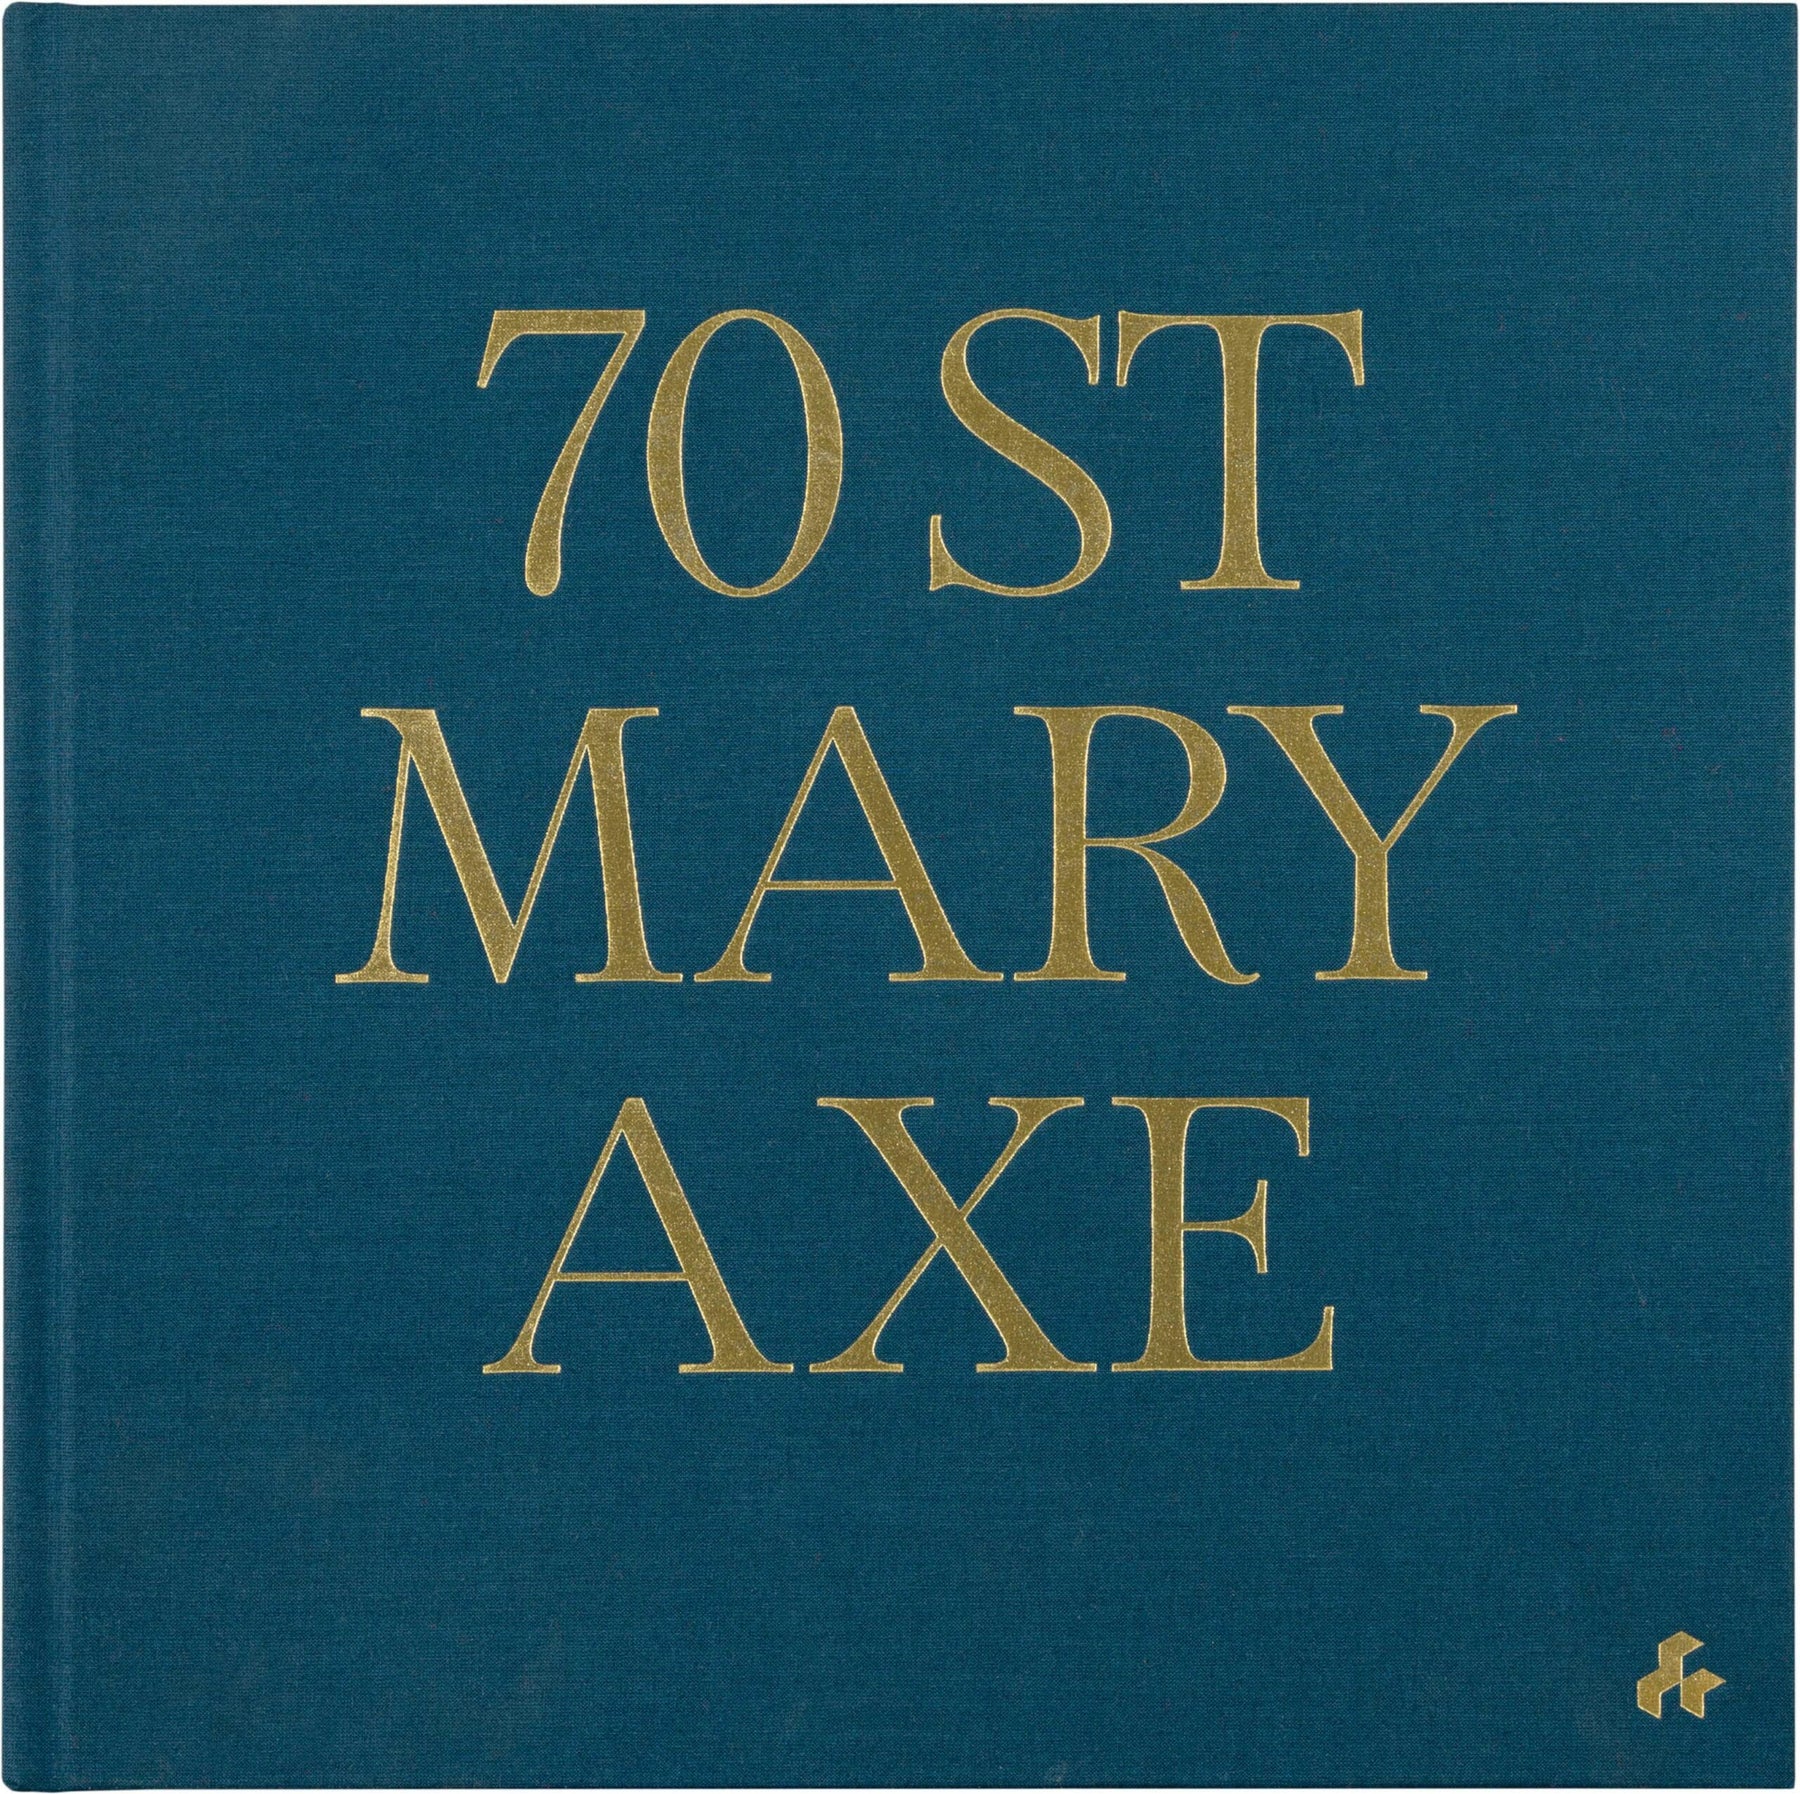 70 St Mary Axe